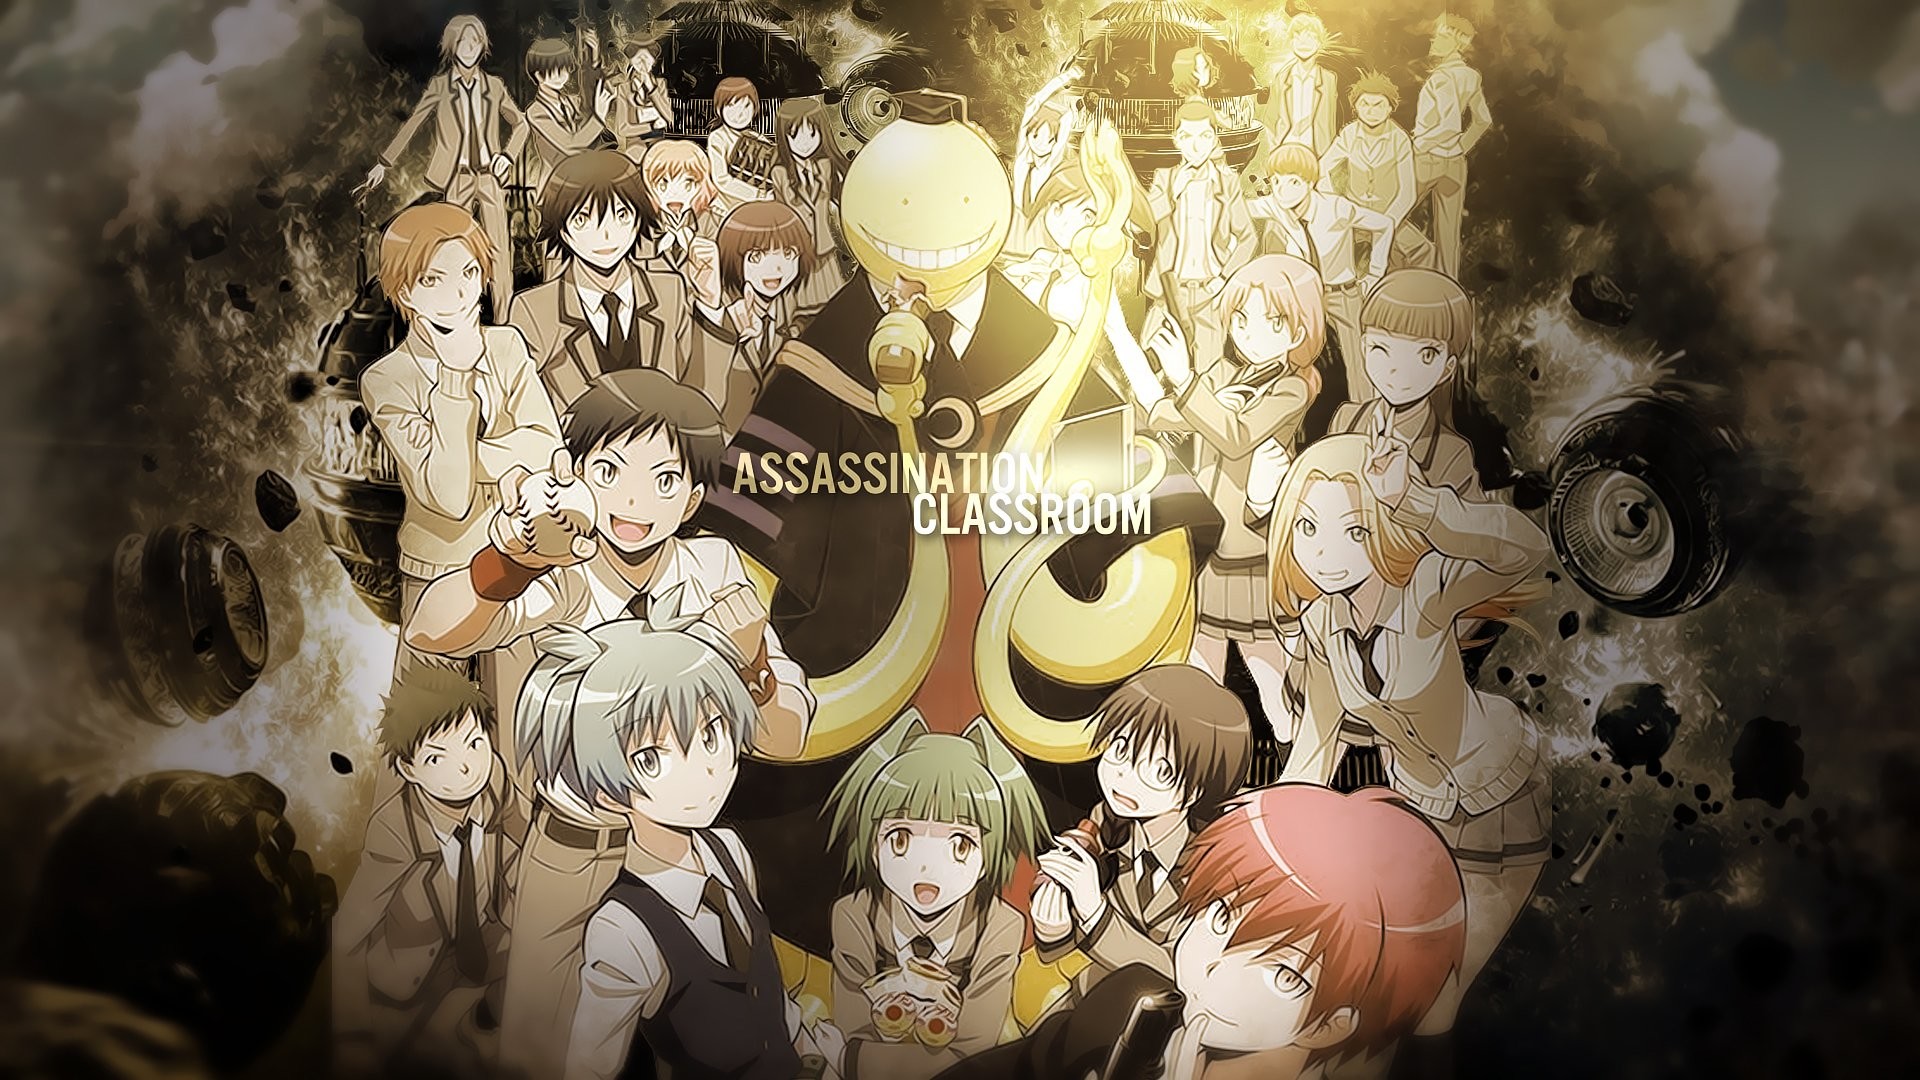 HD Wallpaper Background ID610233. Anime Assassination Classroom